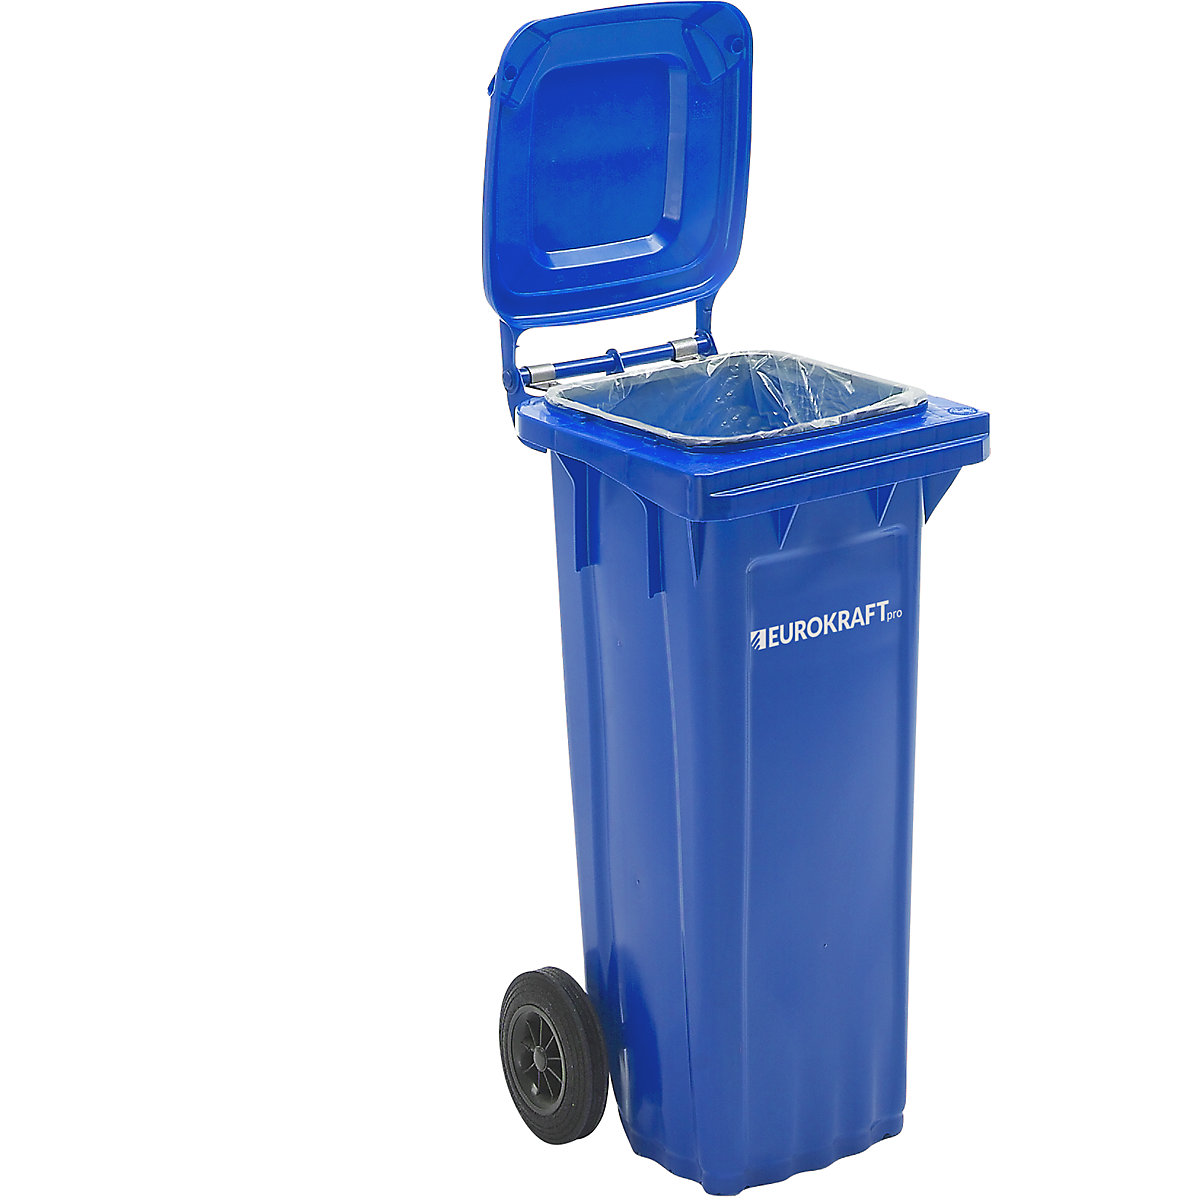 Contentor de lixo em plástico DIN EN 840 – eurokraft pro, volume 80 l, LxAxP 448 x 932 x 514 mm, azul-9